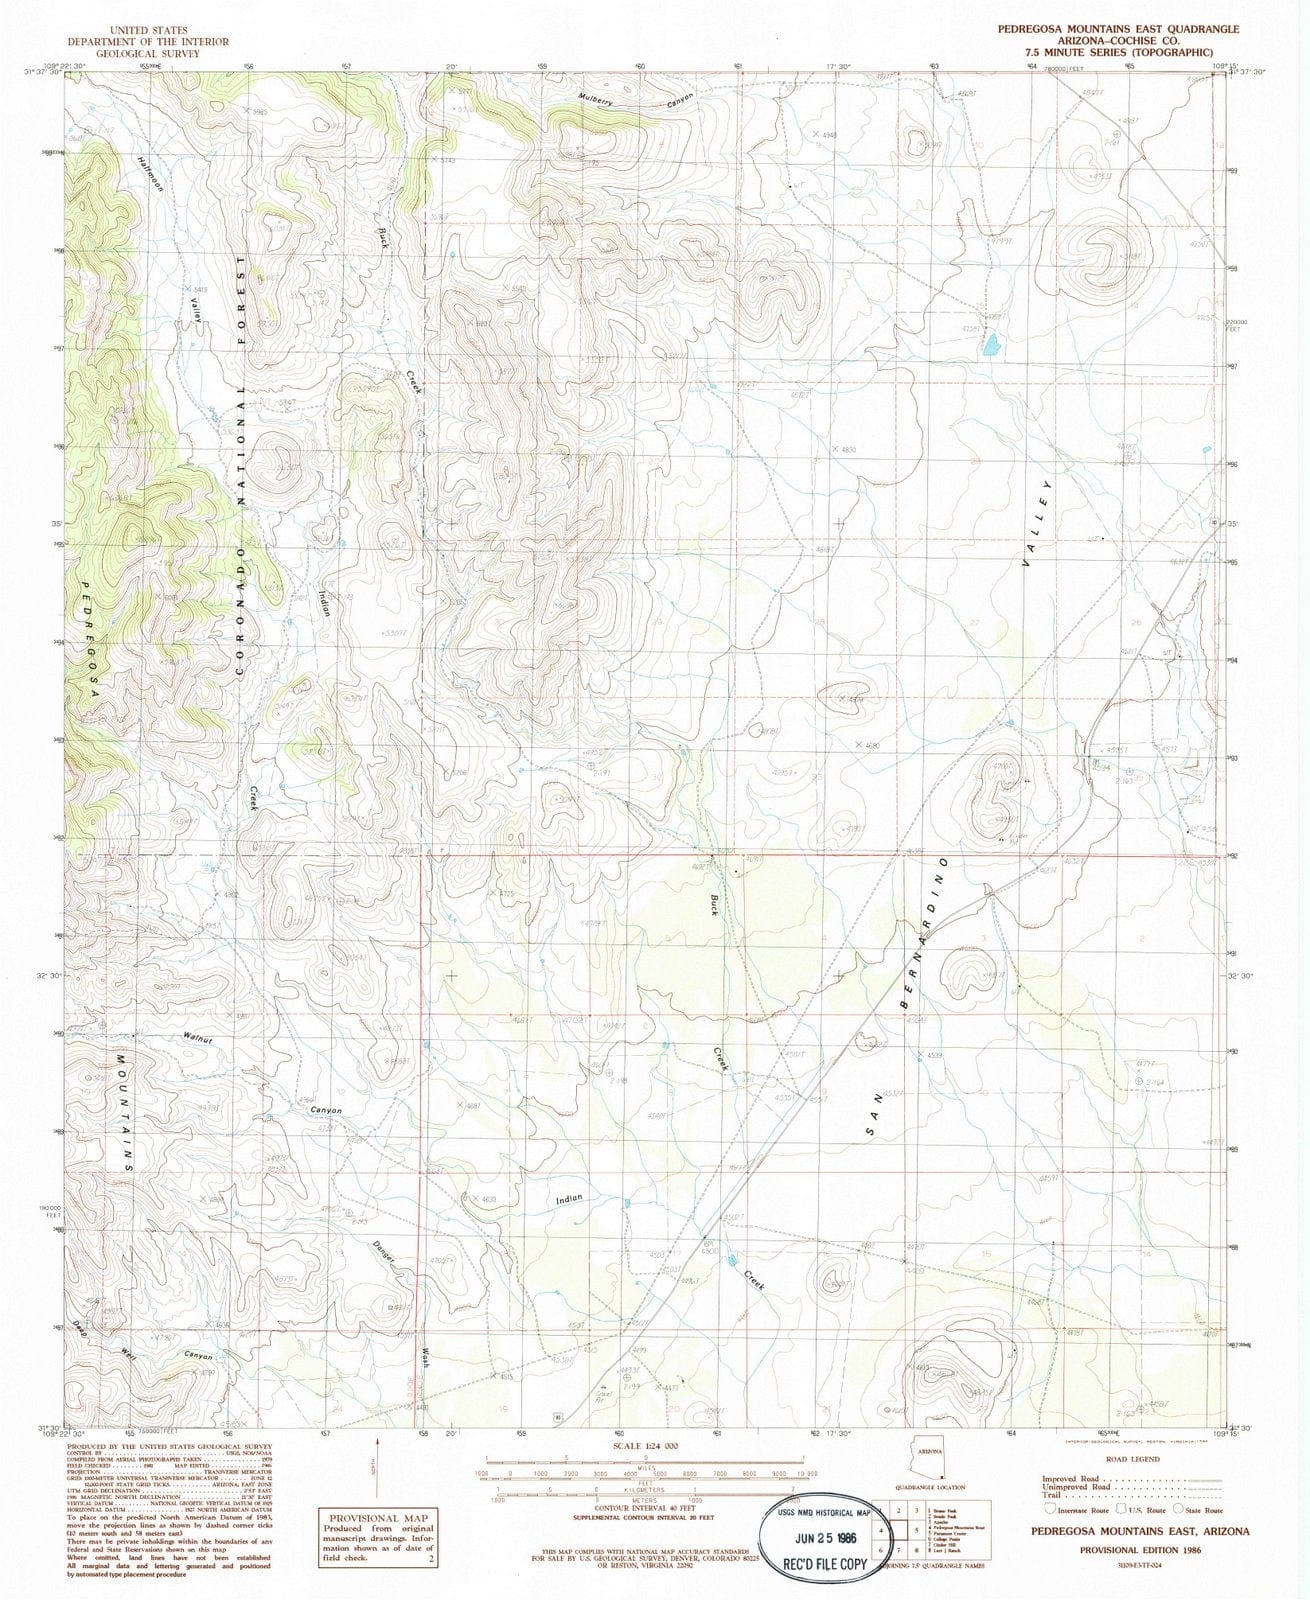 1986 Pedregosa Mountains East, AZ - Arizona - USGS Topographic Map